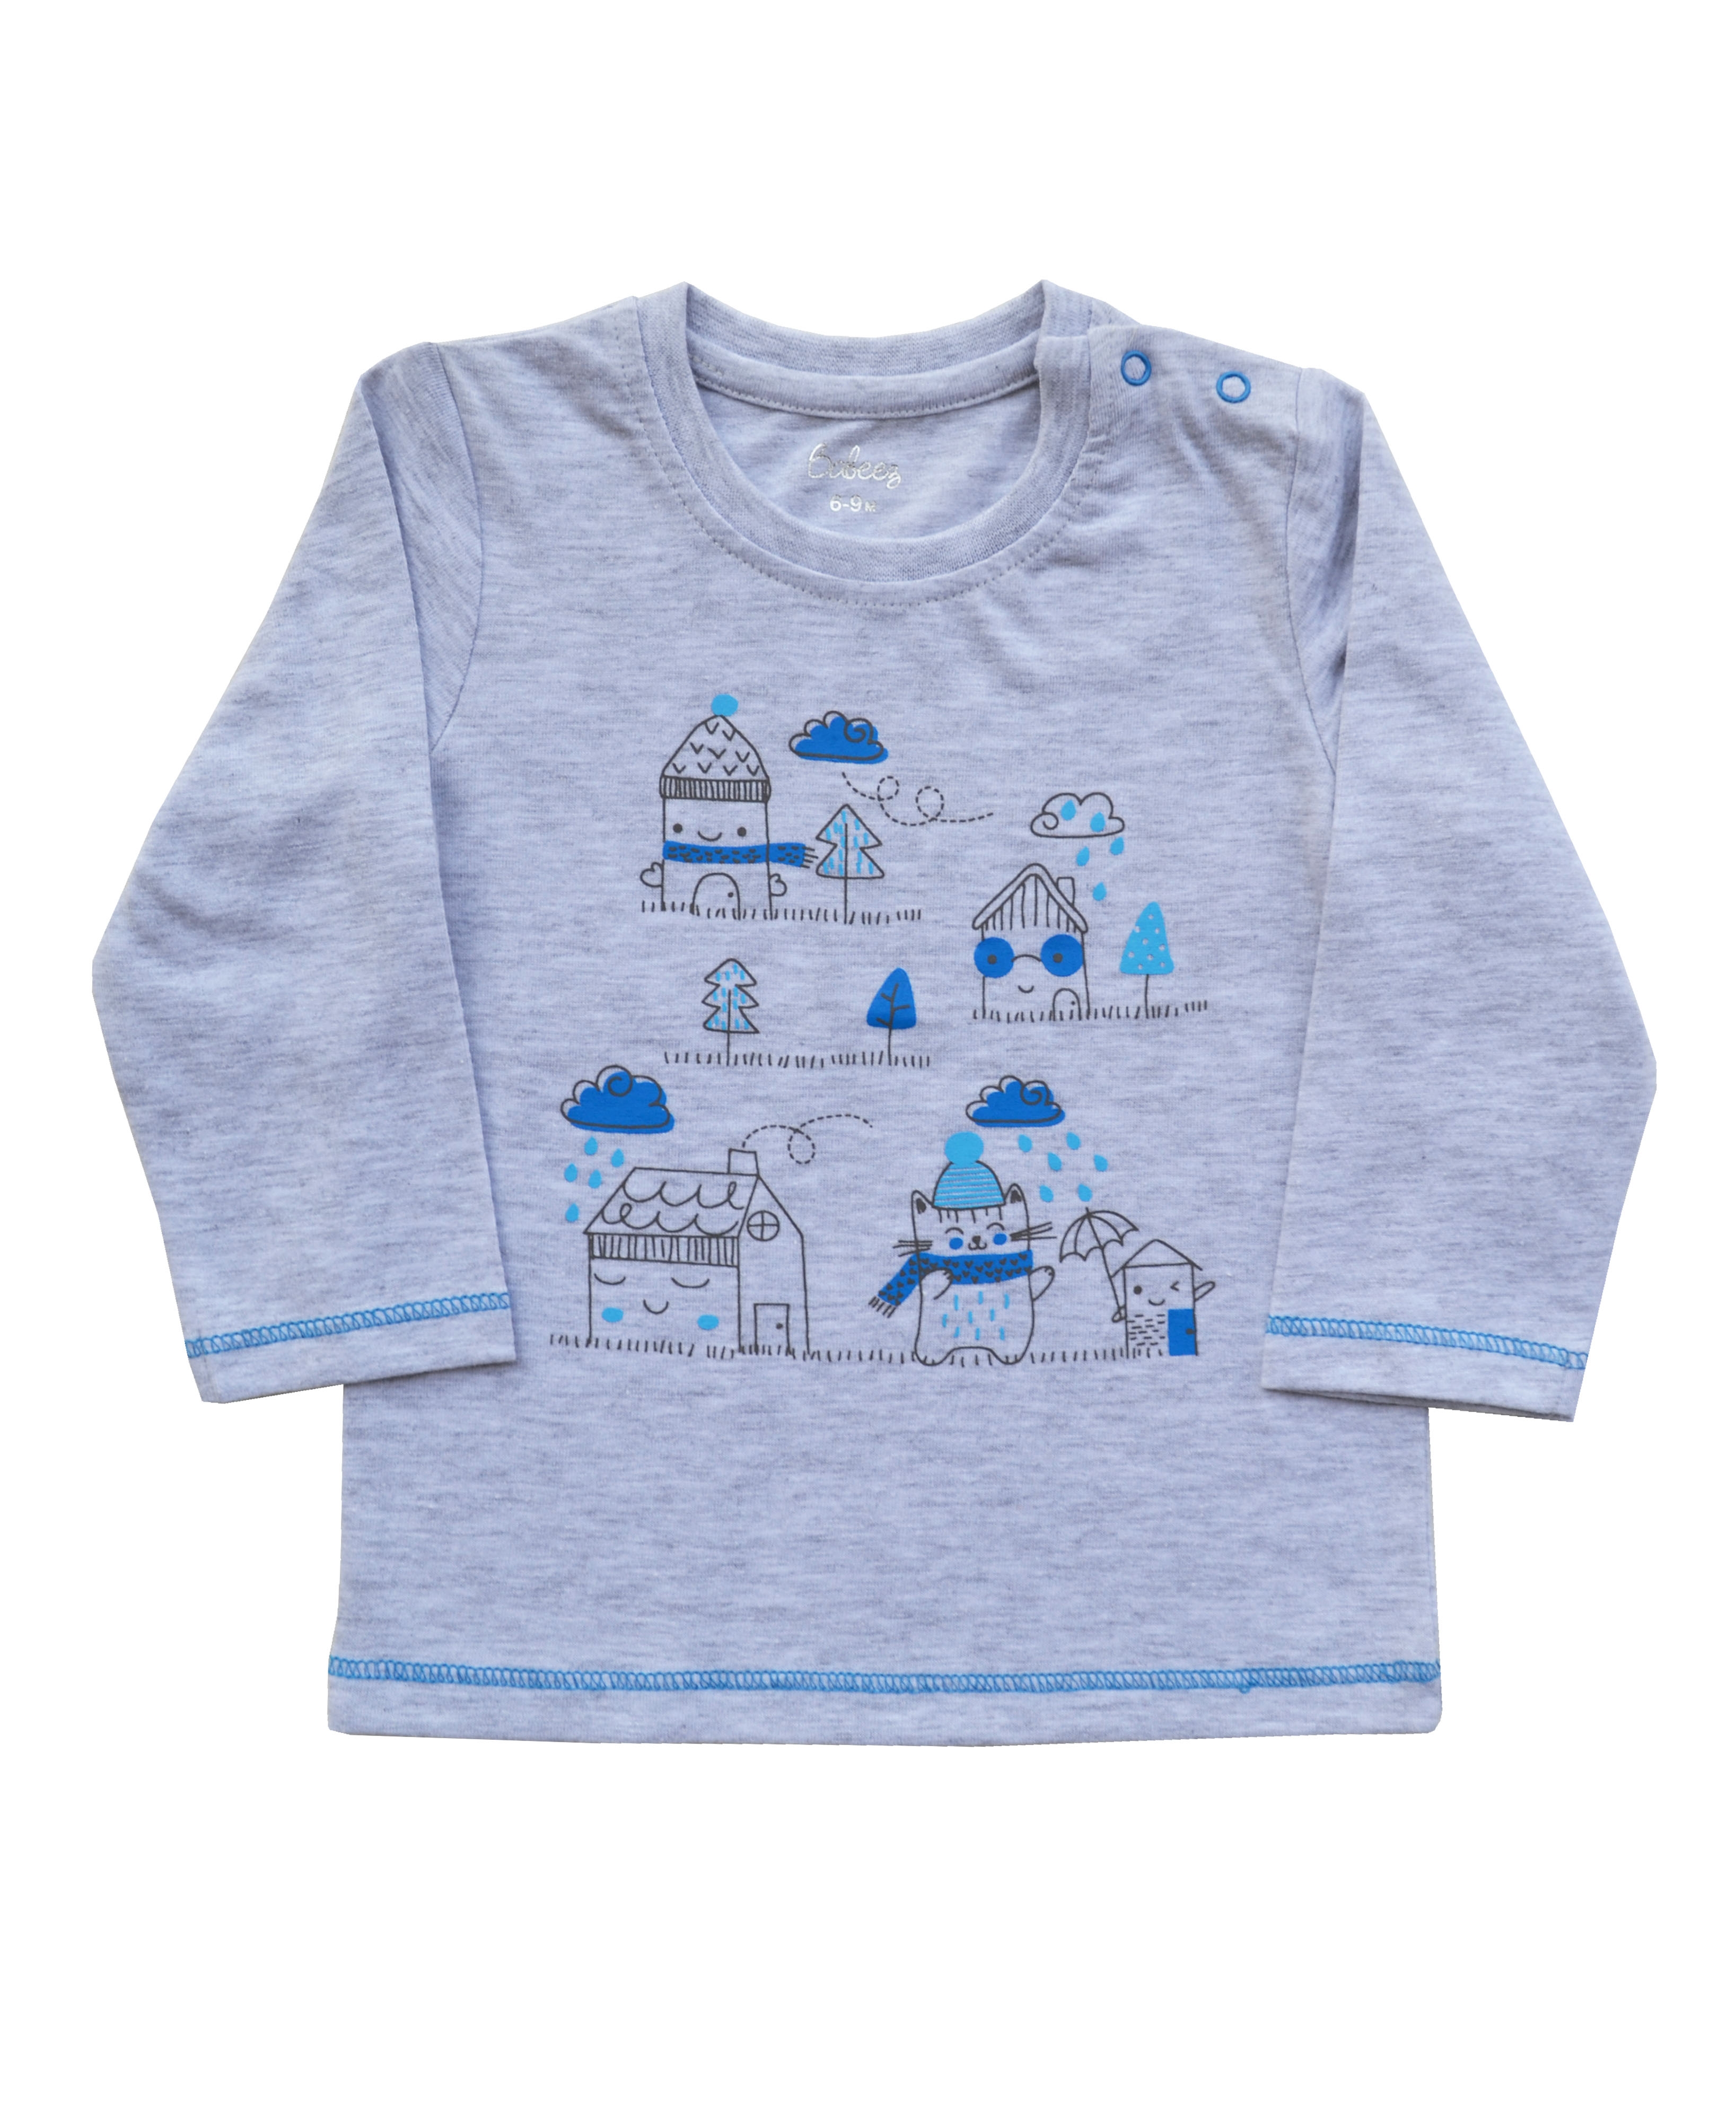 Babeez | Blue House Print on Grey melange Long Sleeve T-Shirt (100% Cotton Single Jersey) undefined